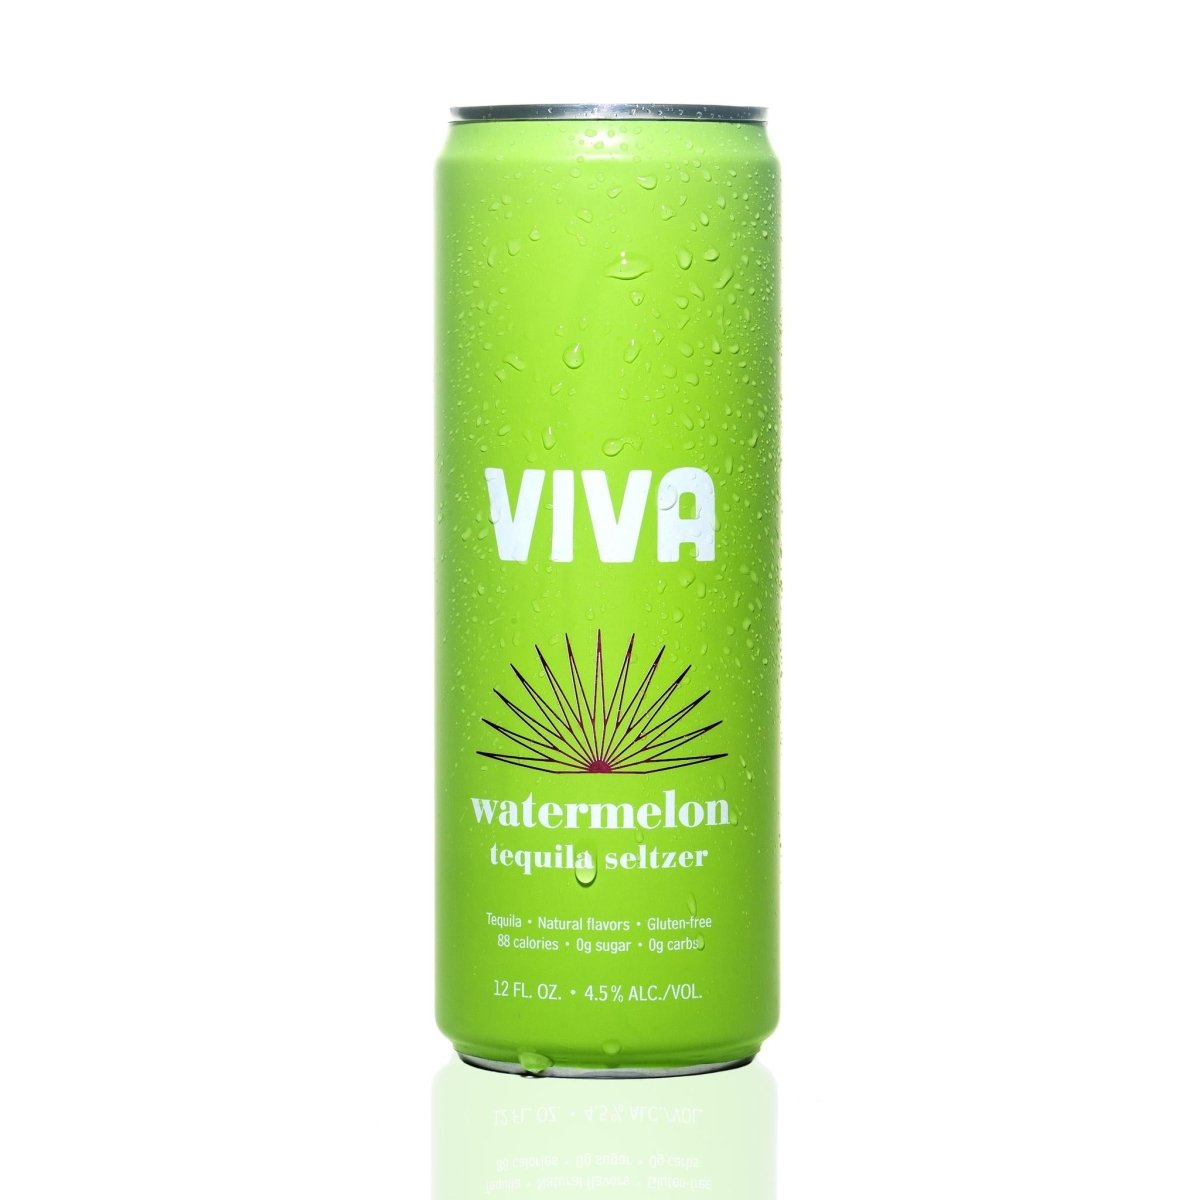 VIVA - Watermelon Tequila Seltzer (4PK) - The Epicurean Trader